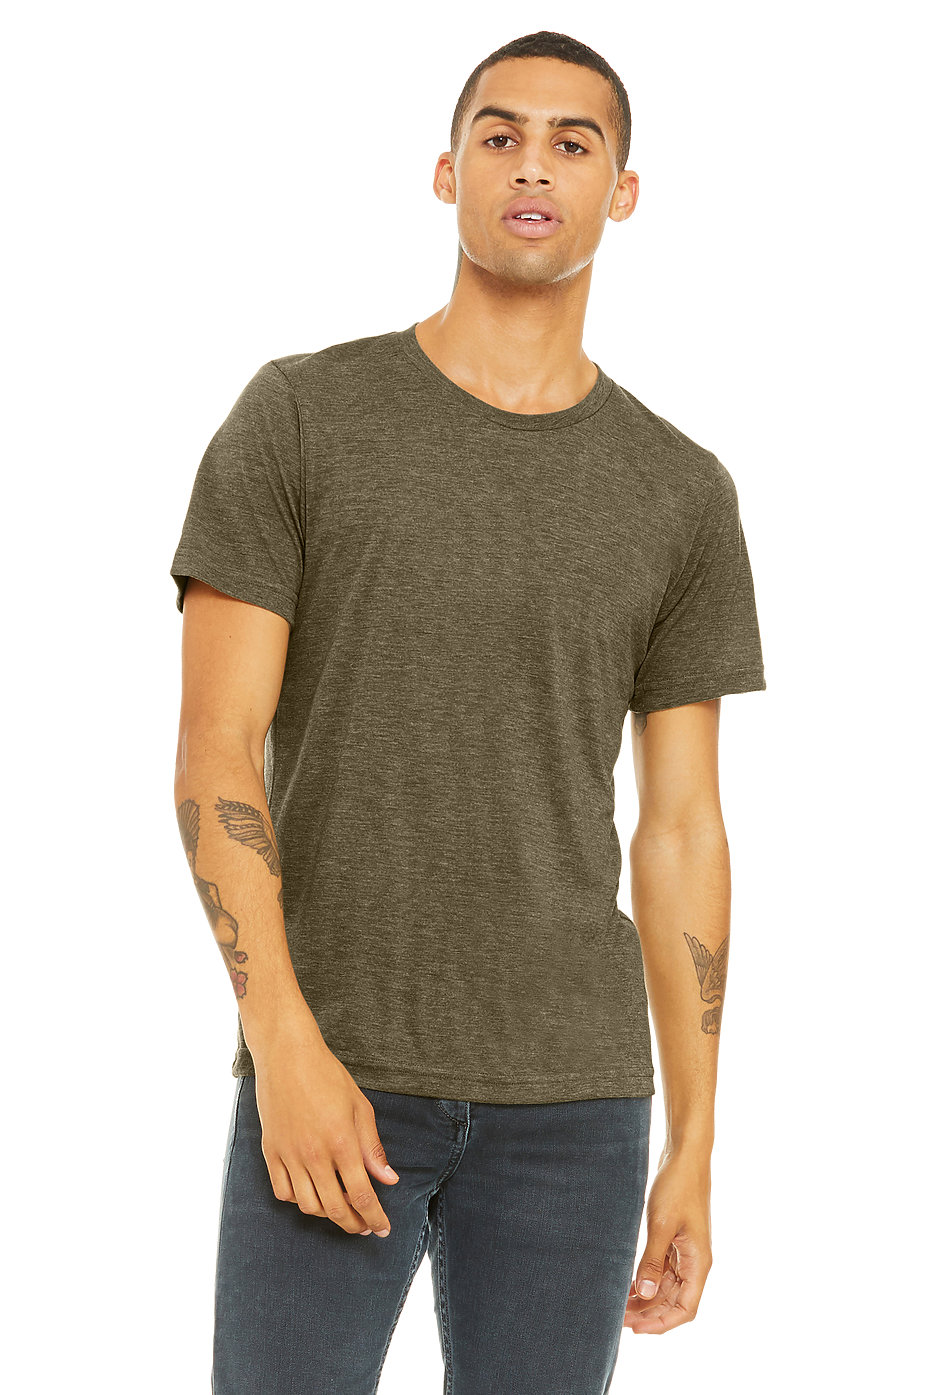 Unisex T Shirts | Wholesale T Shirts | Fast Fashion | Plain Blank T ...